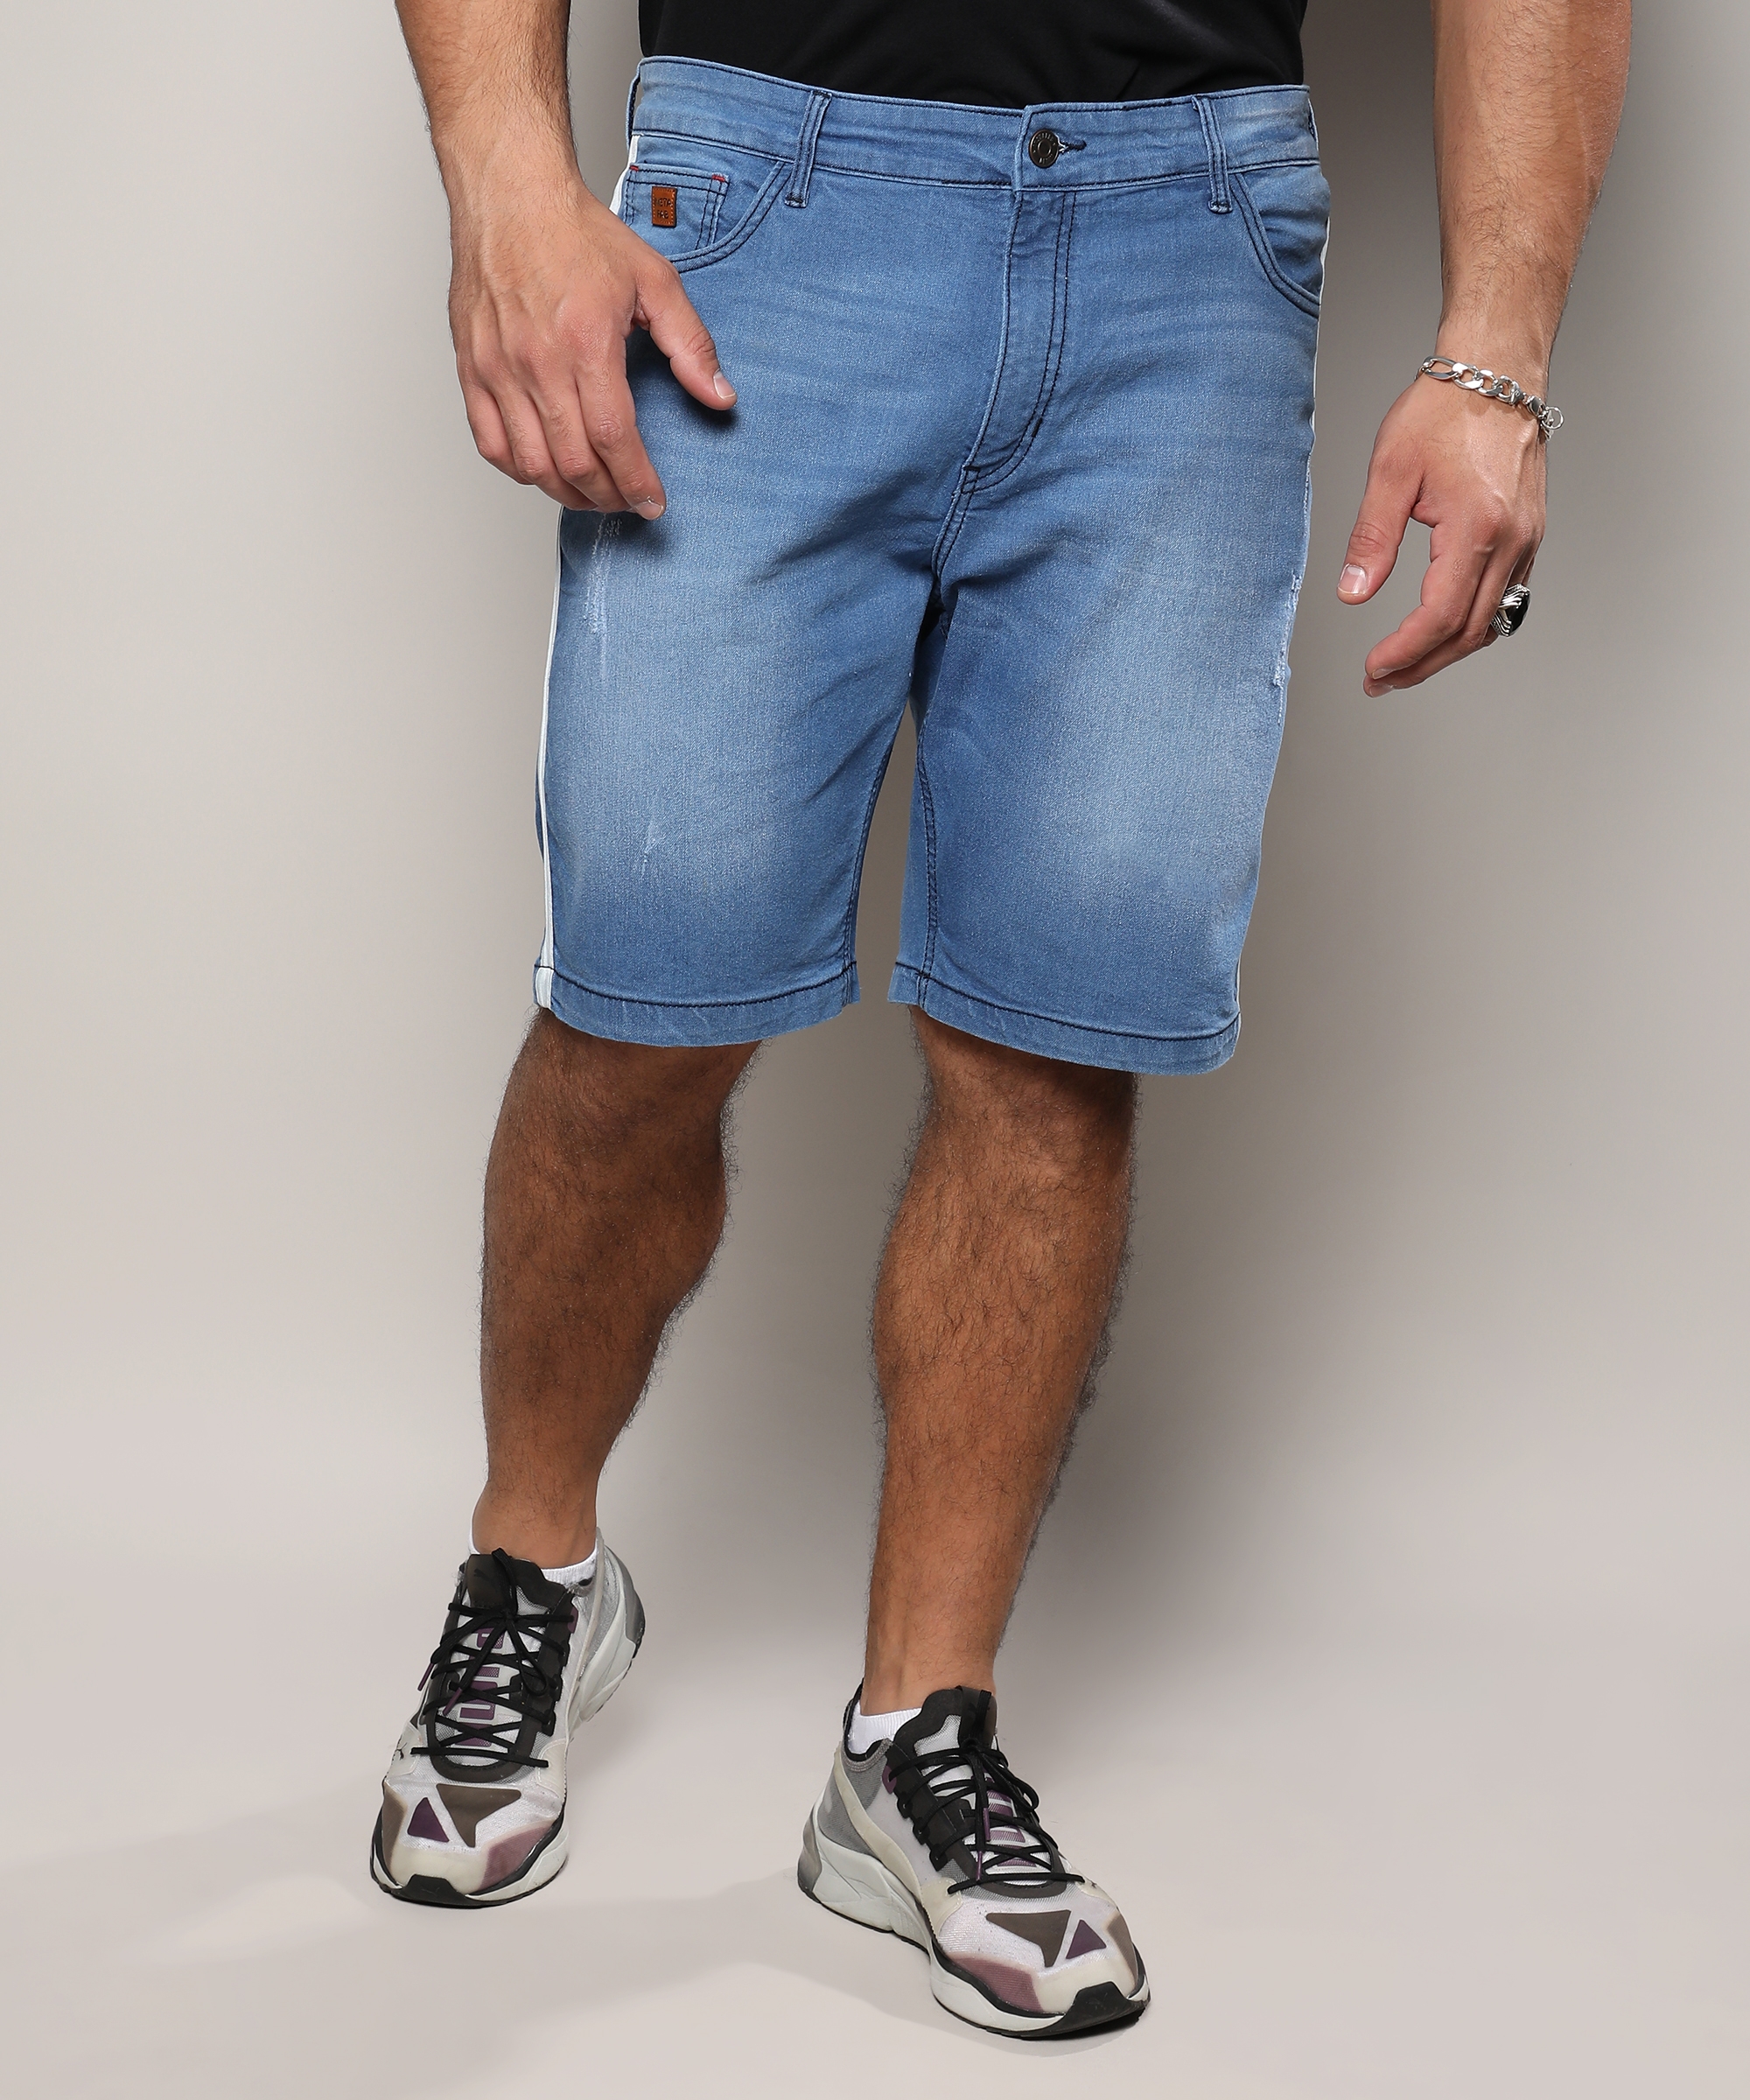 Instafab Plus | Men's Light Blue Side-Striped Denim Shorts